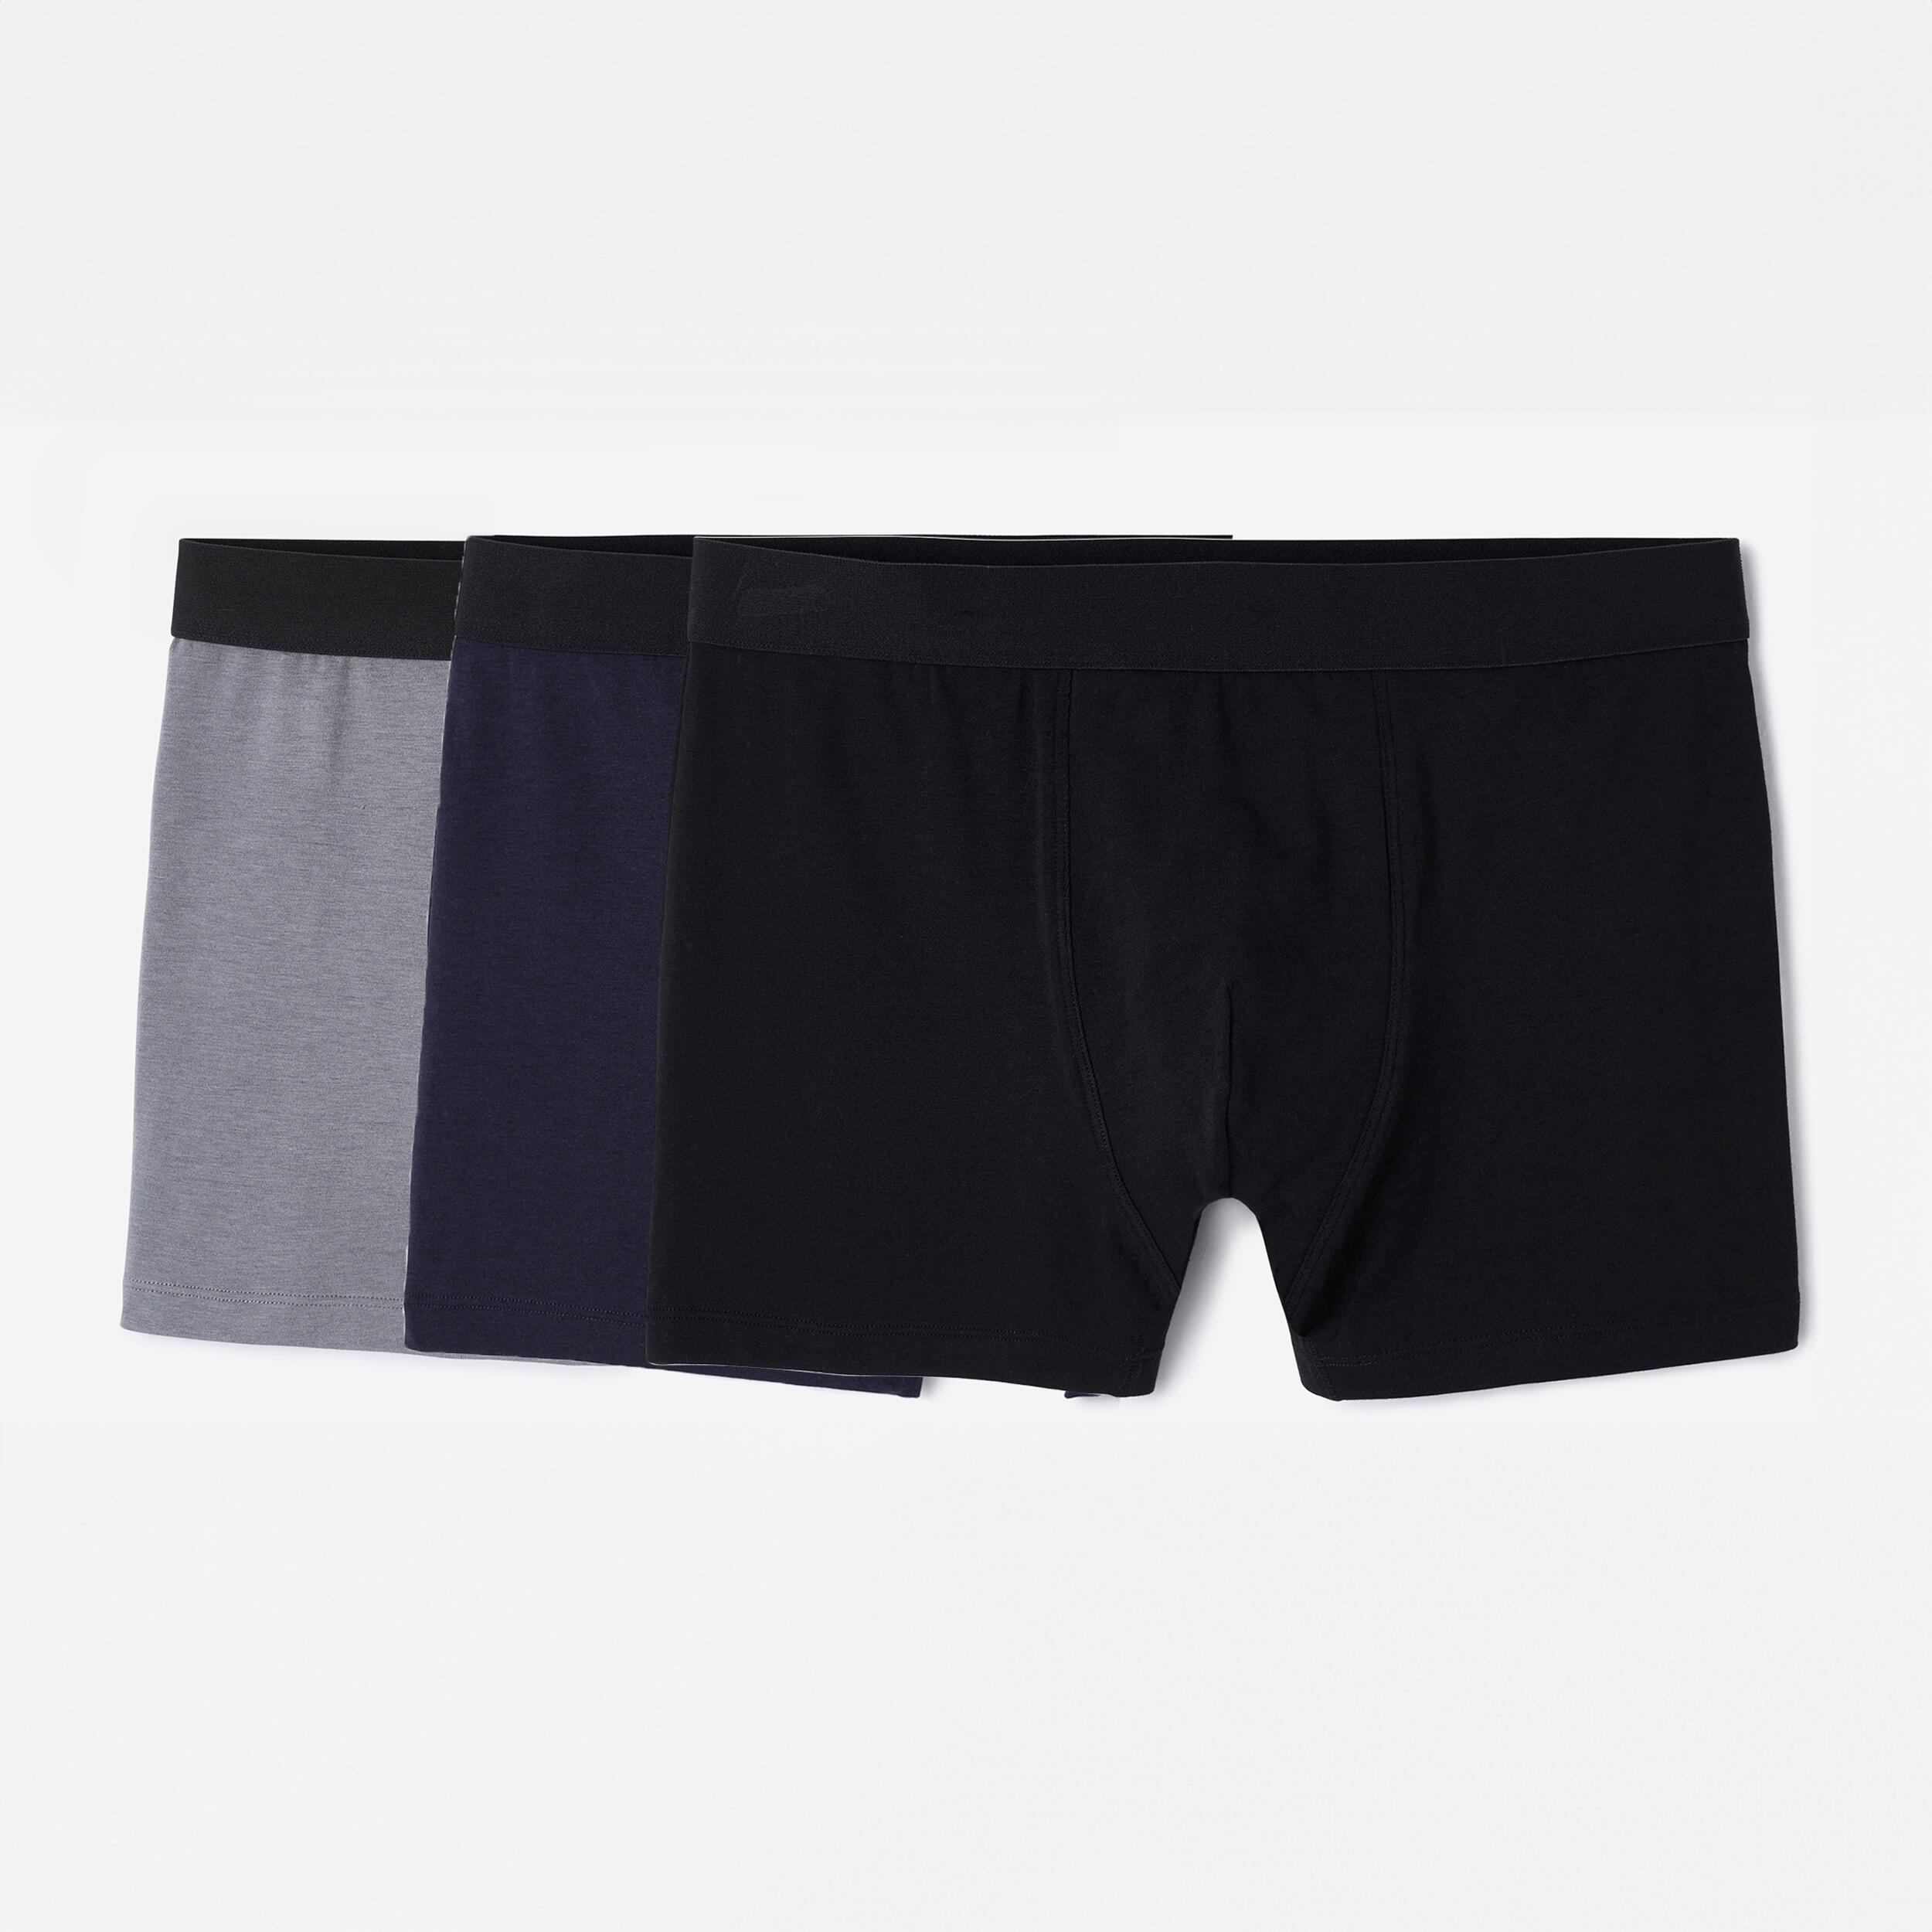 Image of Men’s Fitness Boxer Shorts - 3-Pack